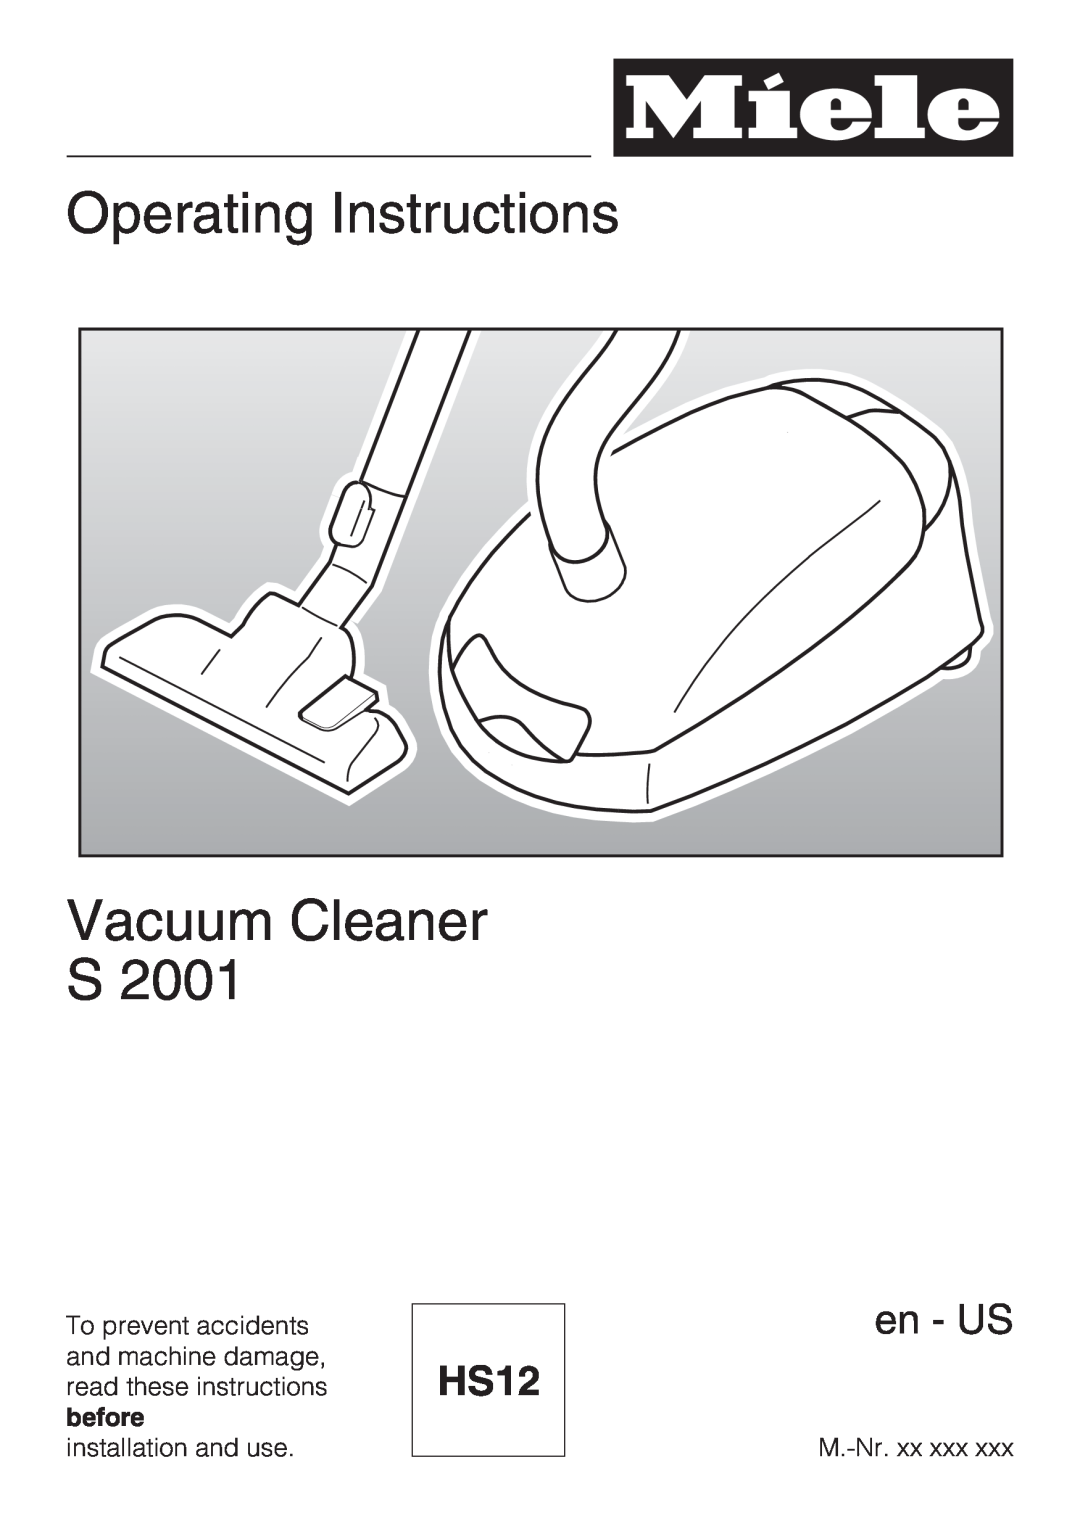 Miele S 2001 manual Operating Instructions Vacuum Cleaner S, HS12, en, fr, es - US, CA, MX 